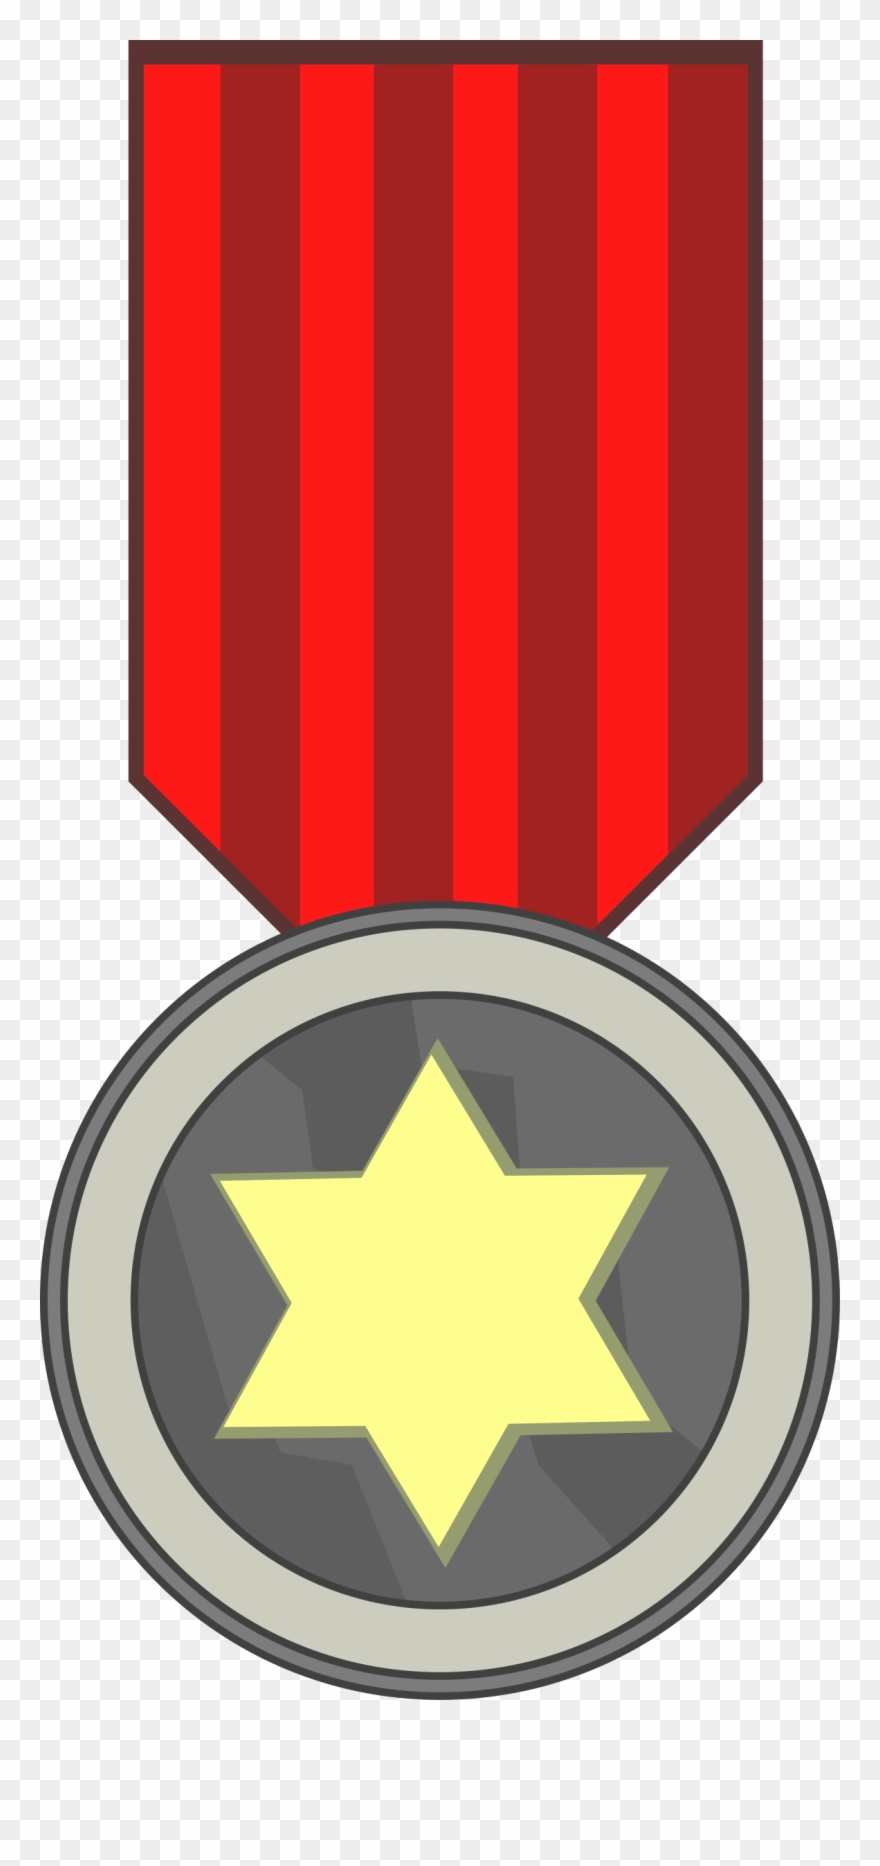 Price sticker free award. Medal clipart star medal